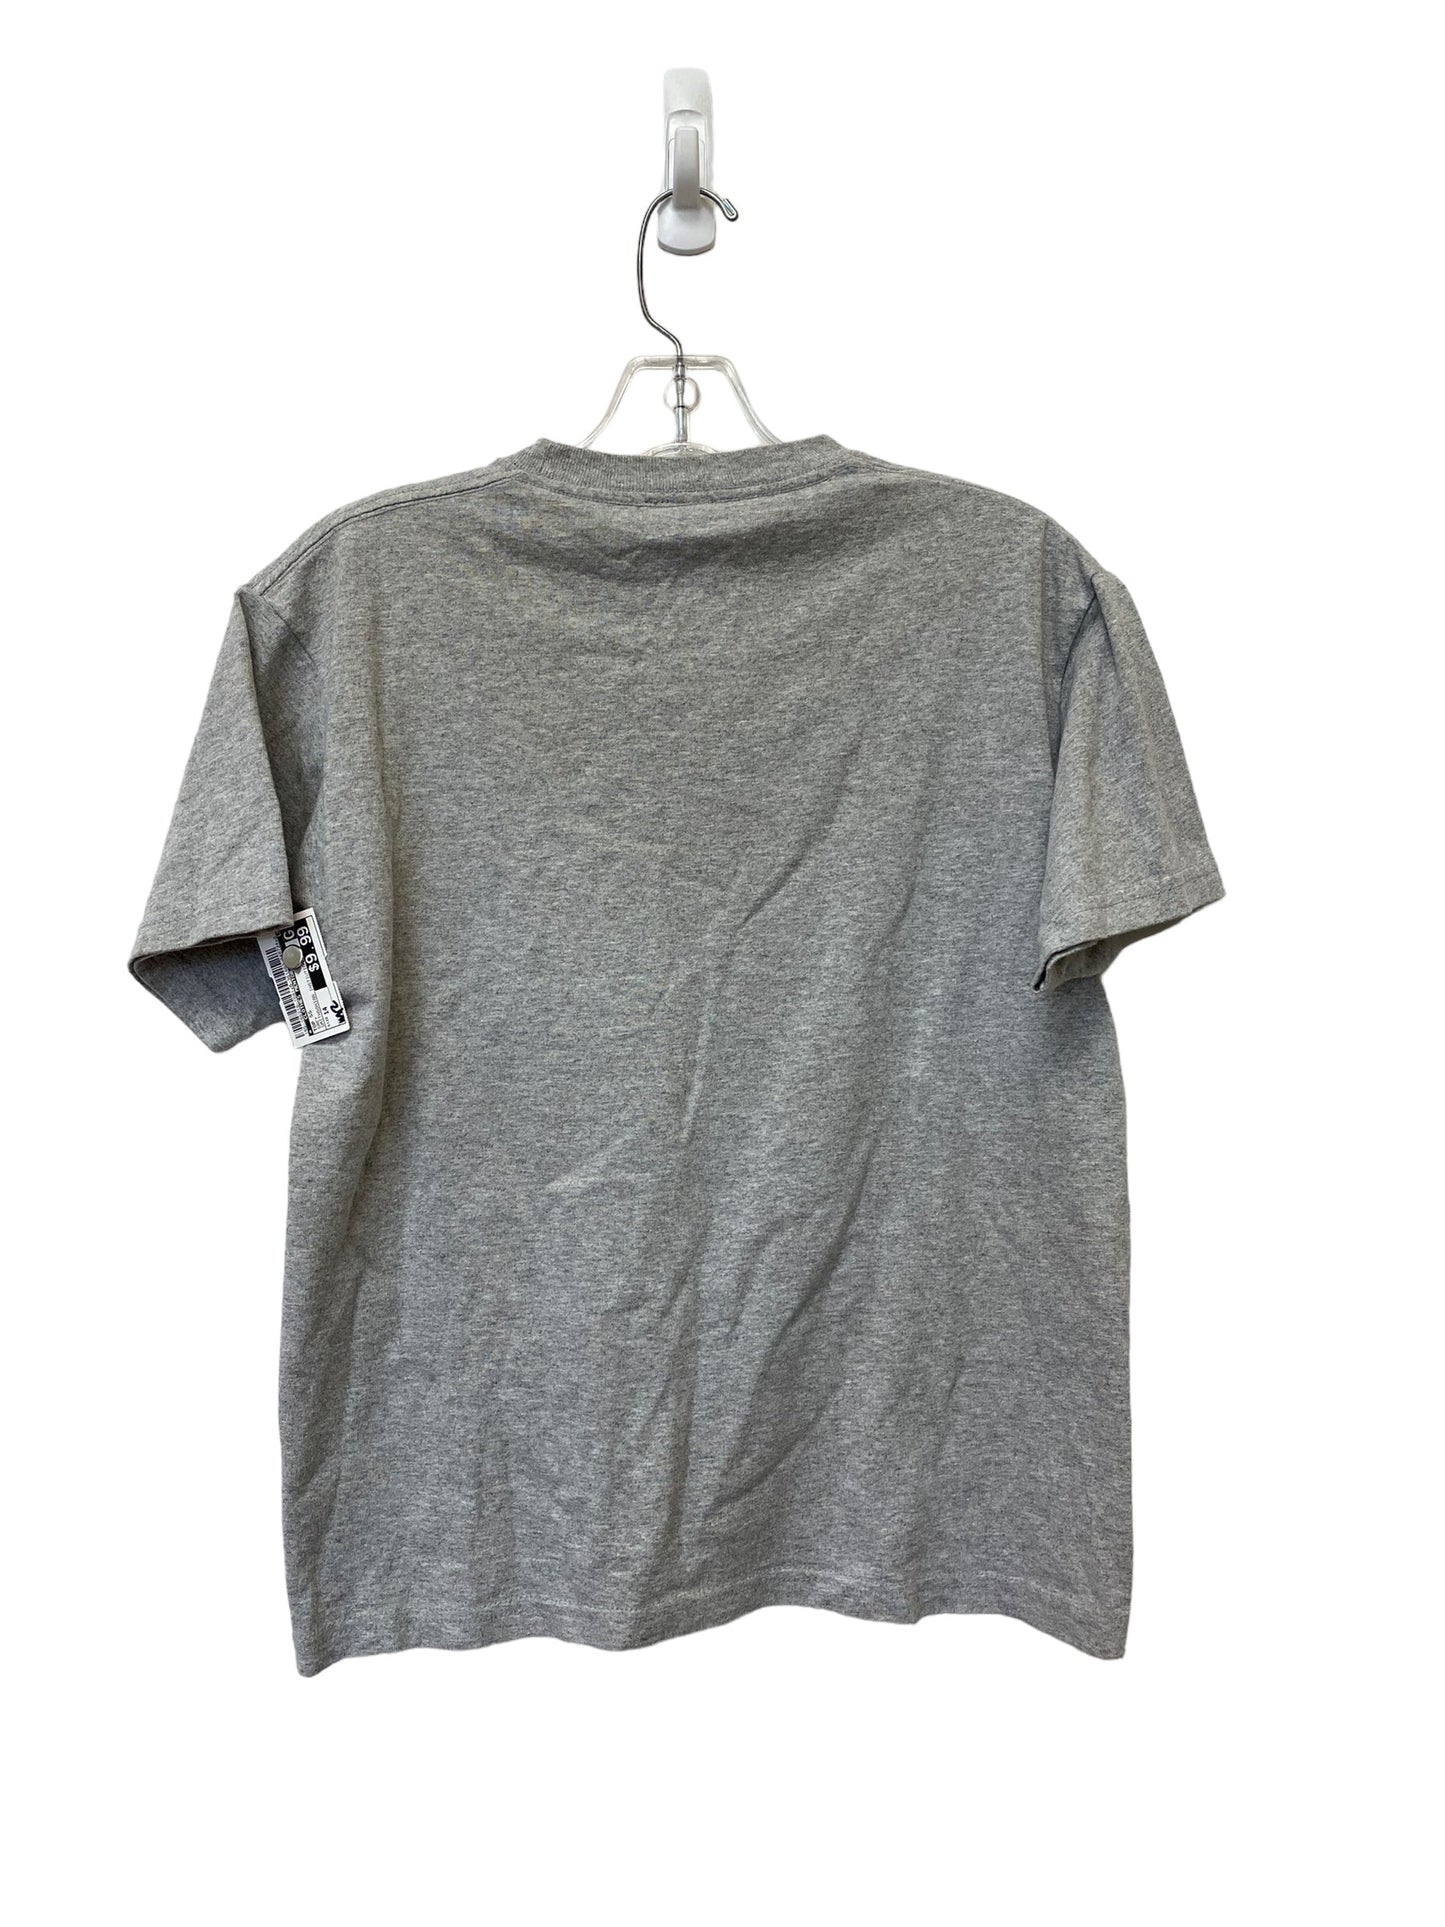 Grey Top Short Sleeve Clothes Mentor, Size 14